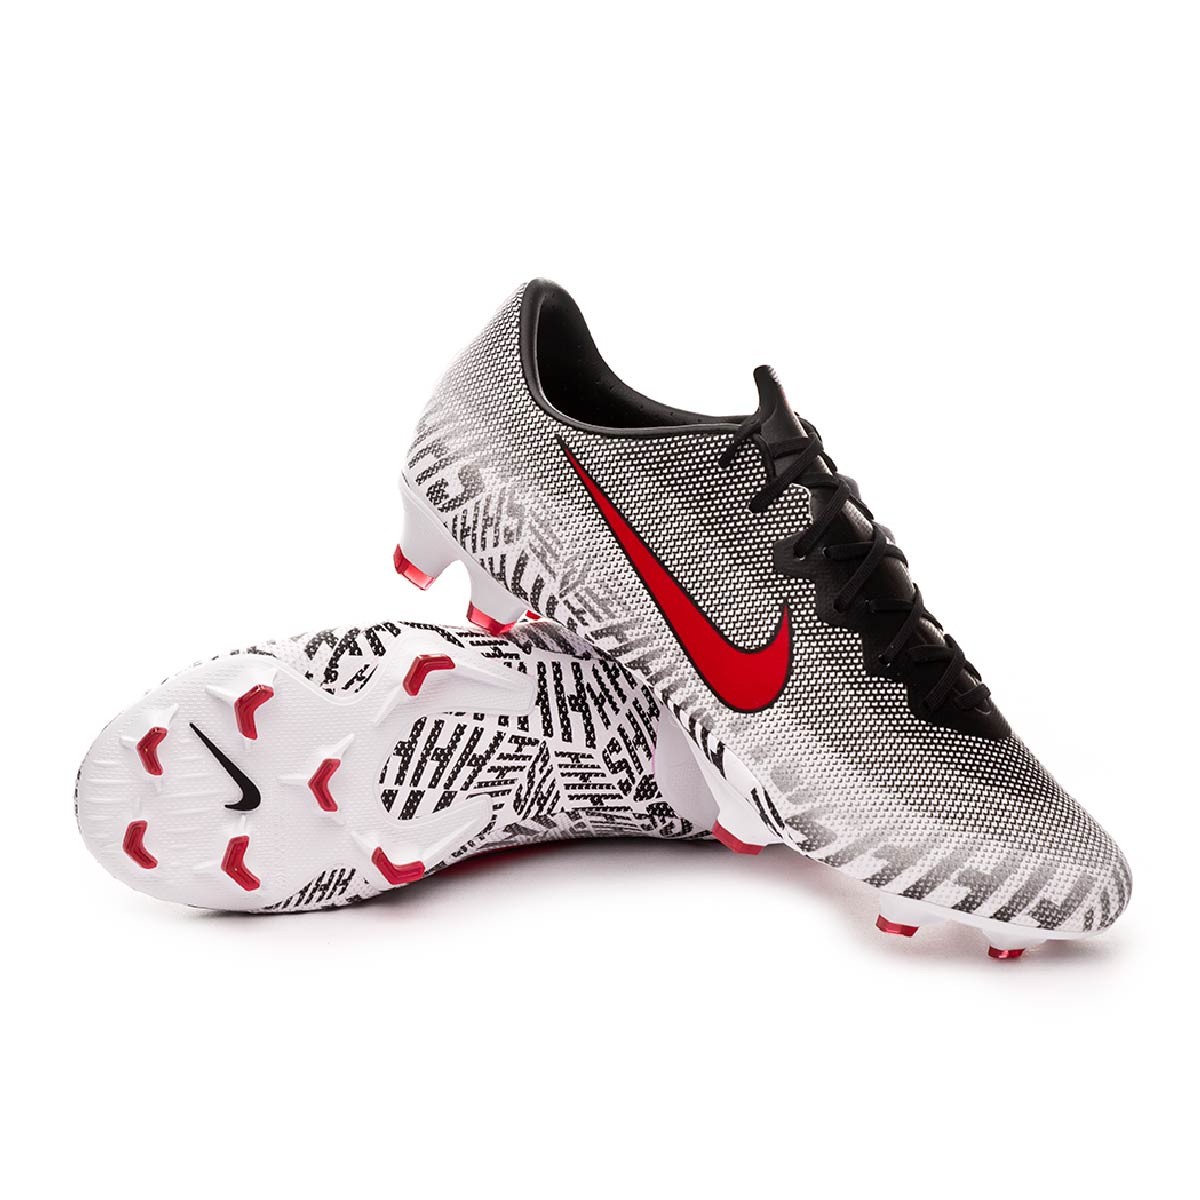 Football Boots Nike Mercurial Vapor XII Pro Neymar Jr FG White-Challenge  red-Black - Football store Fútbol Emotion